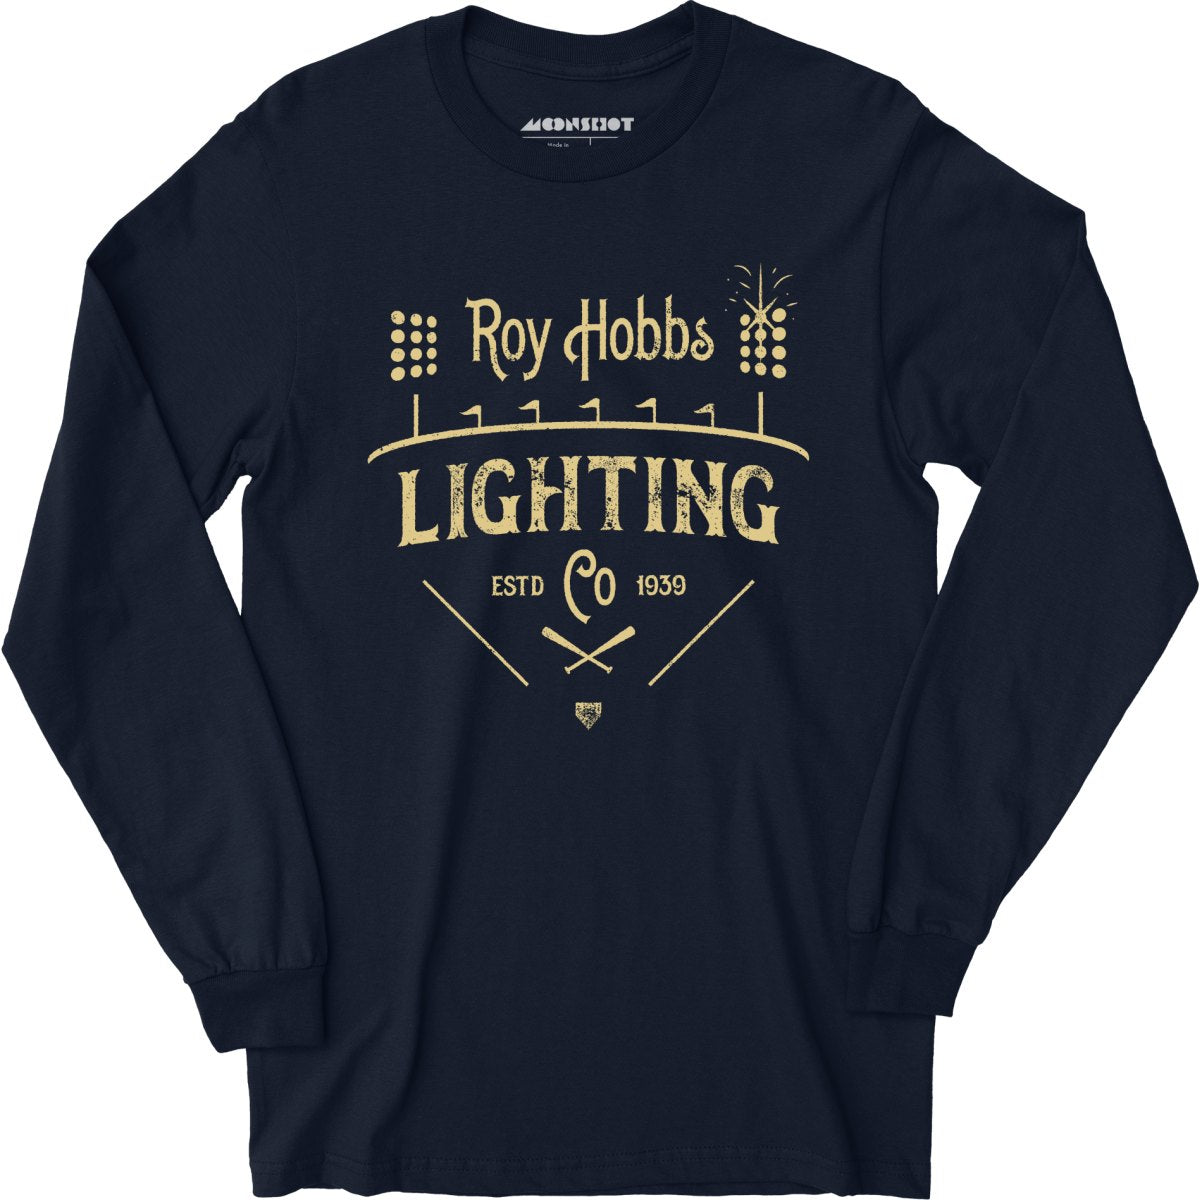 Roy Hobbs Lighting Co. - Long Sleeve T-Shirt